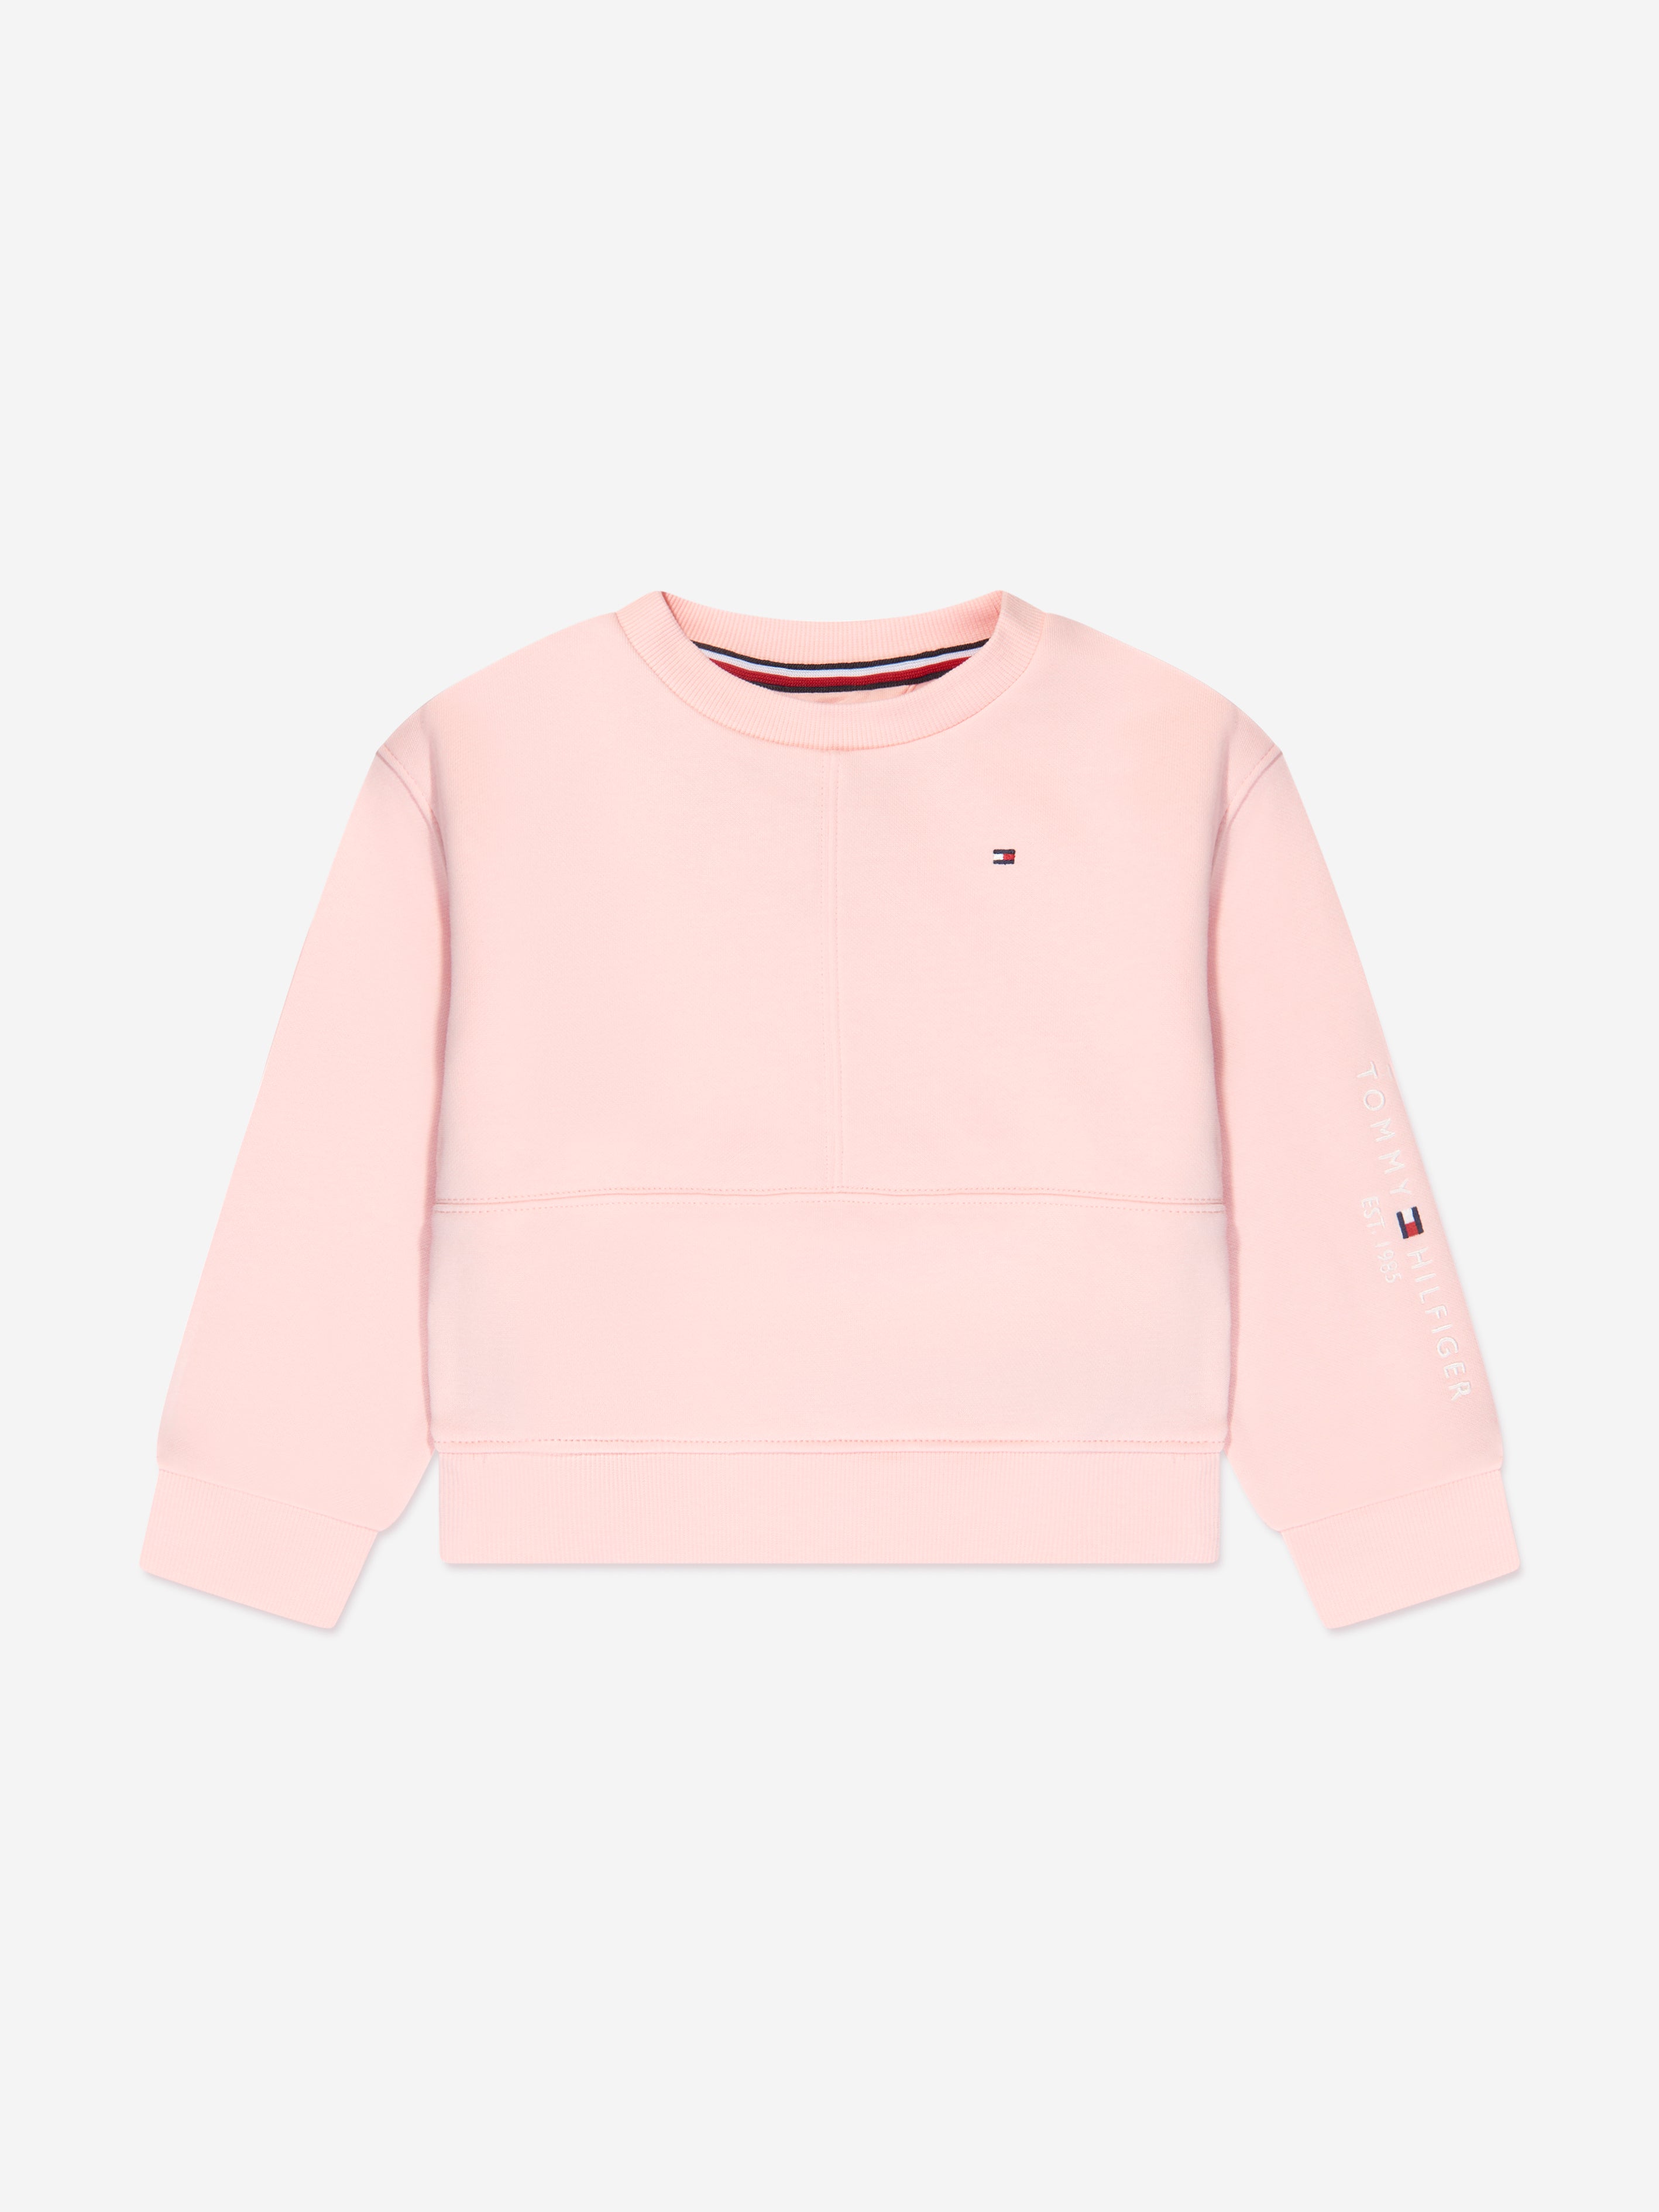 Girls Essential Sweatshirt in Pink | Childsplay Clothing